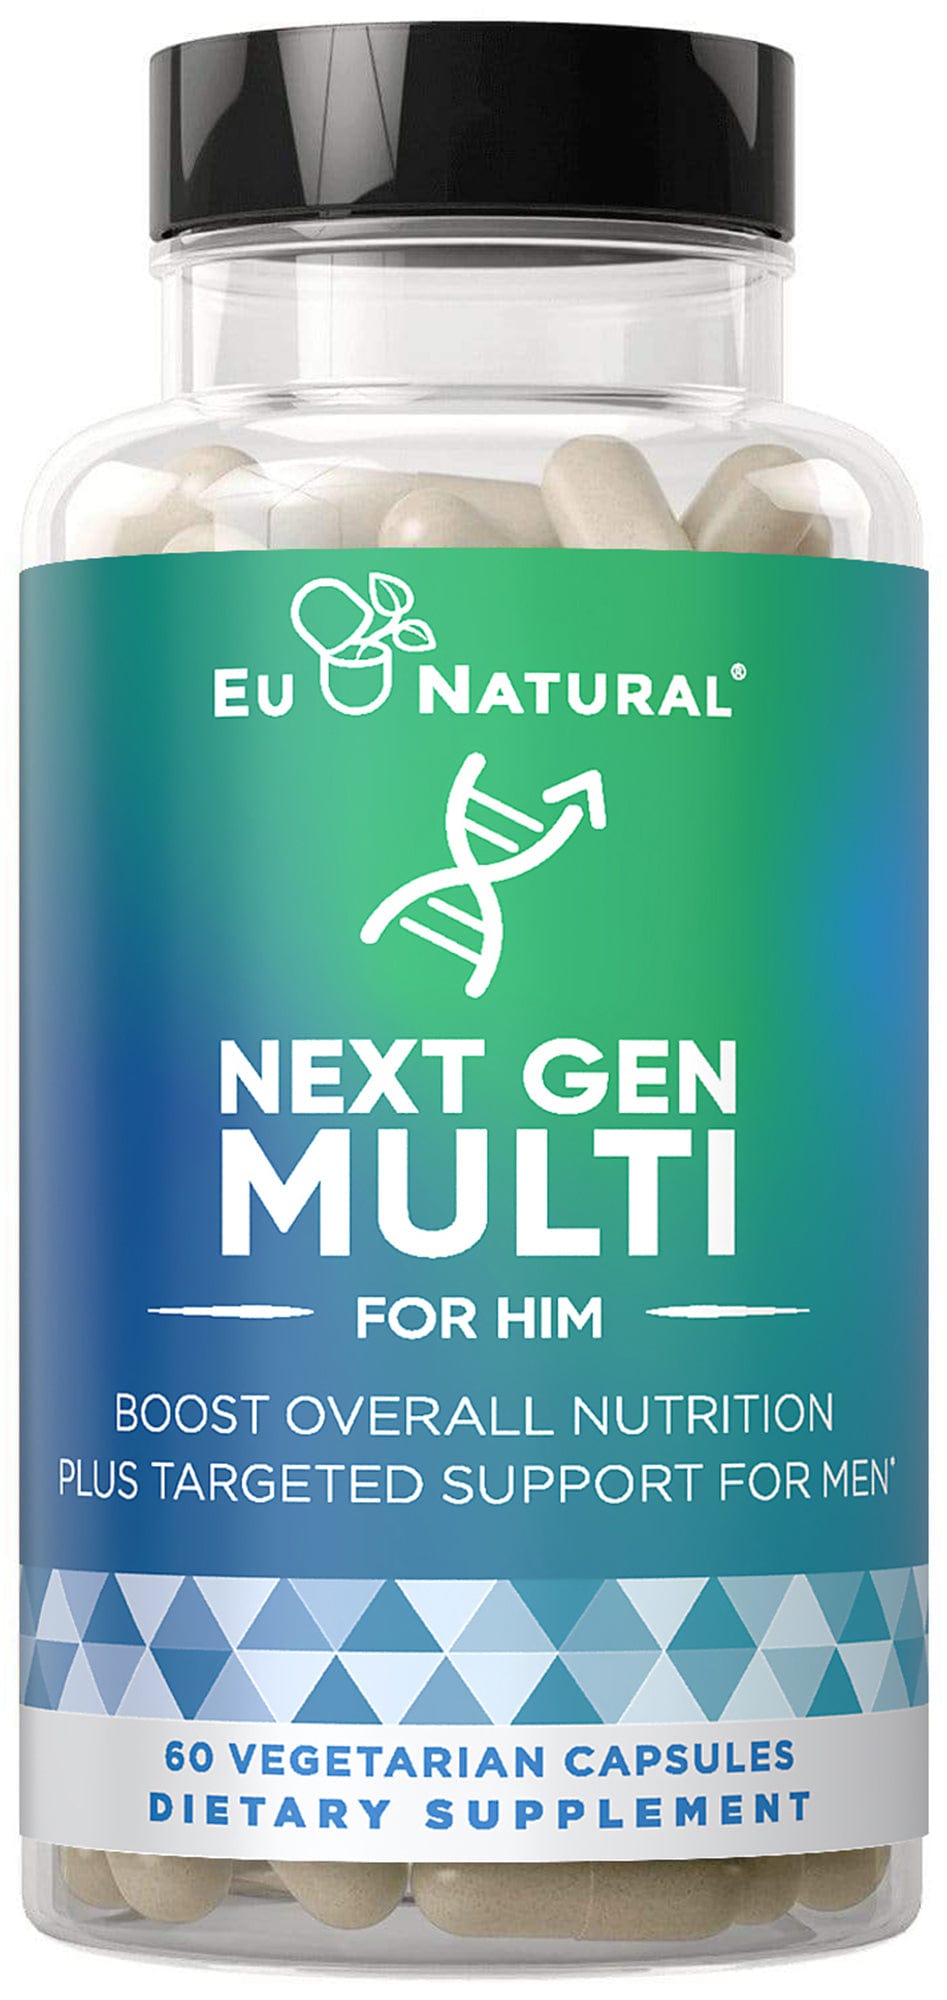 Eu Natural 40% OFF NEXT GEN MULTIVITAMIN FOR MEN